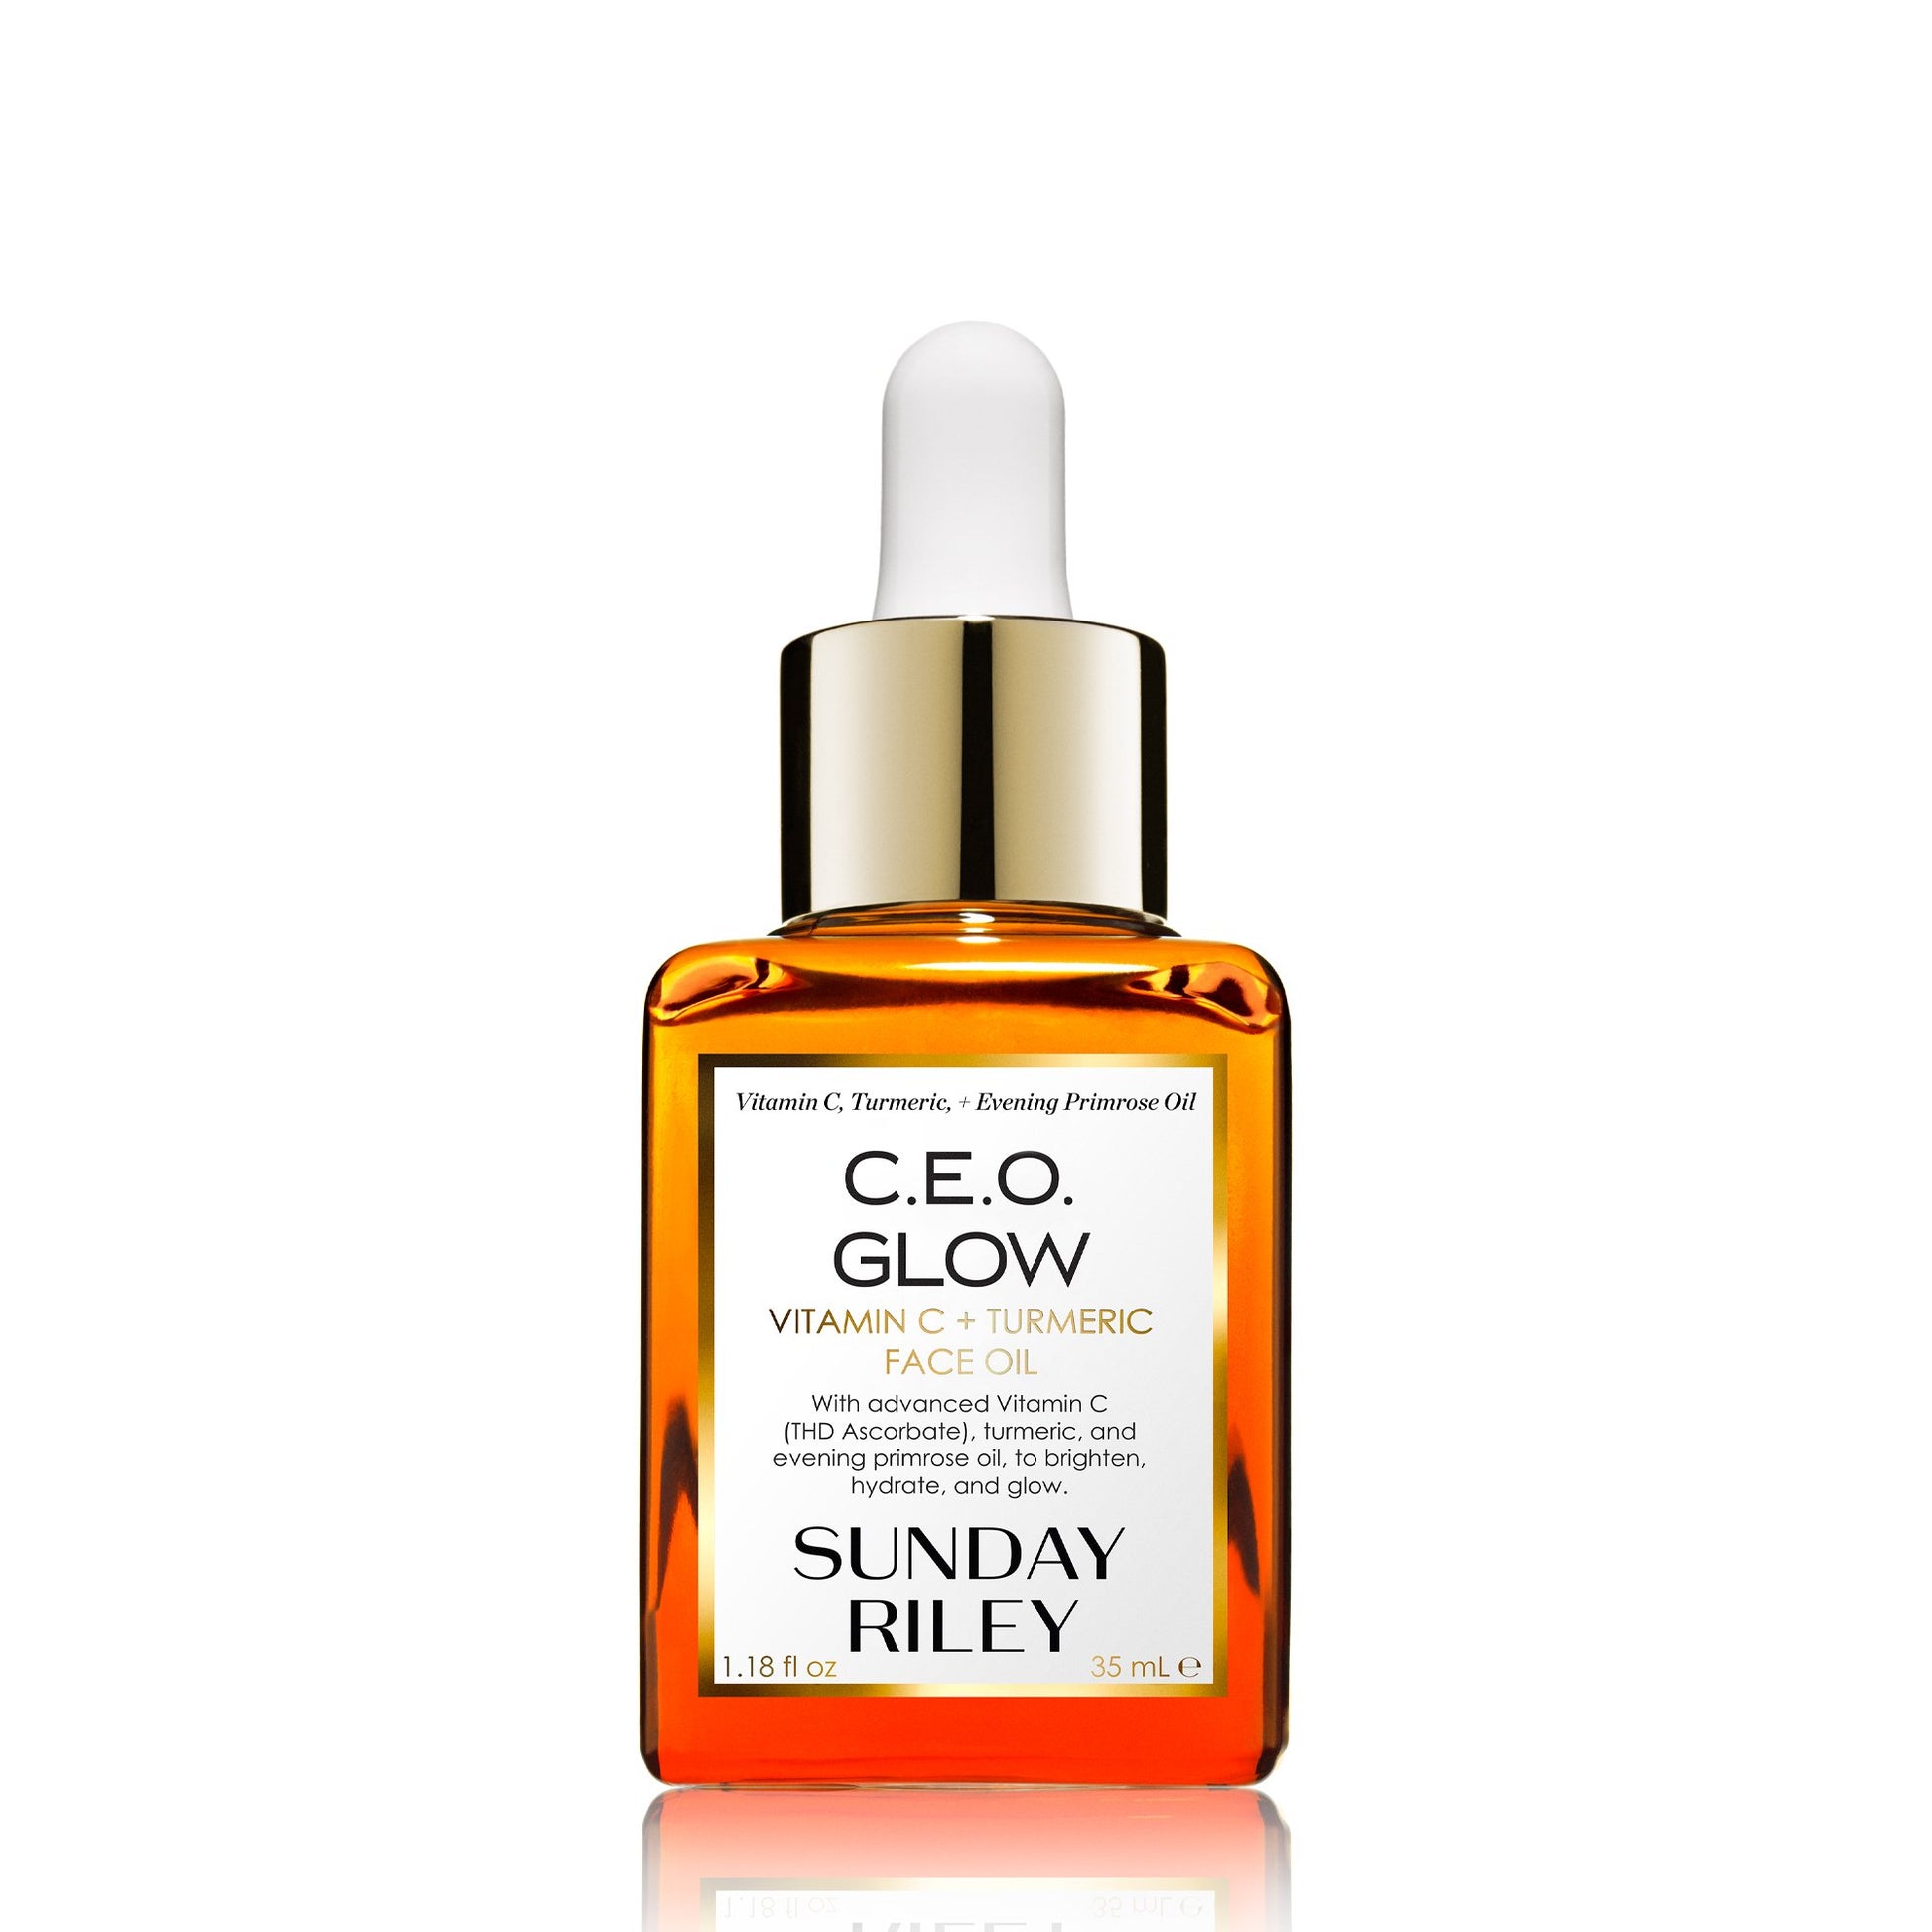 C.E.O. Glow Face Oil in a orange gradient glass bottle with silicon dropper.